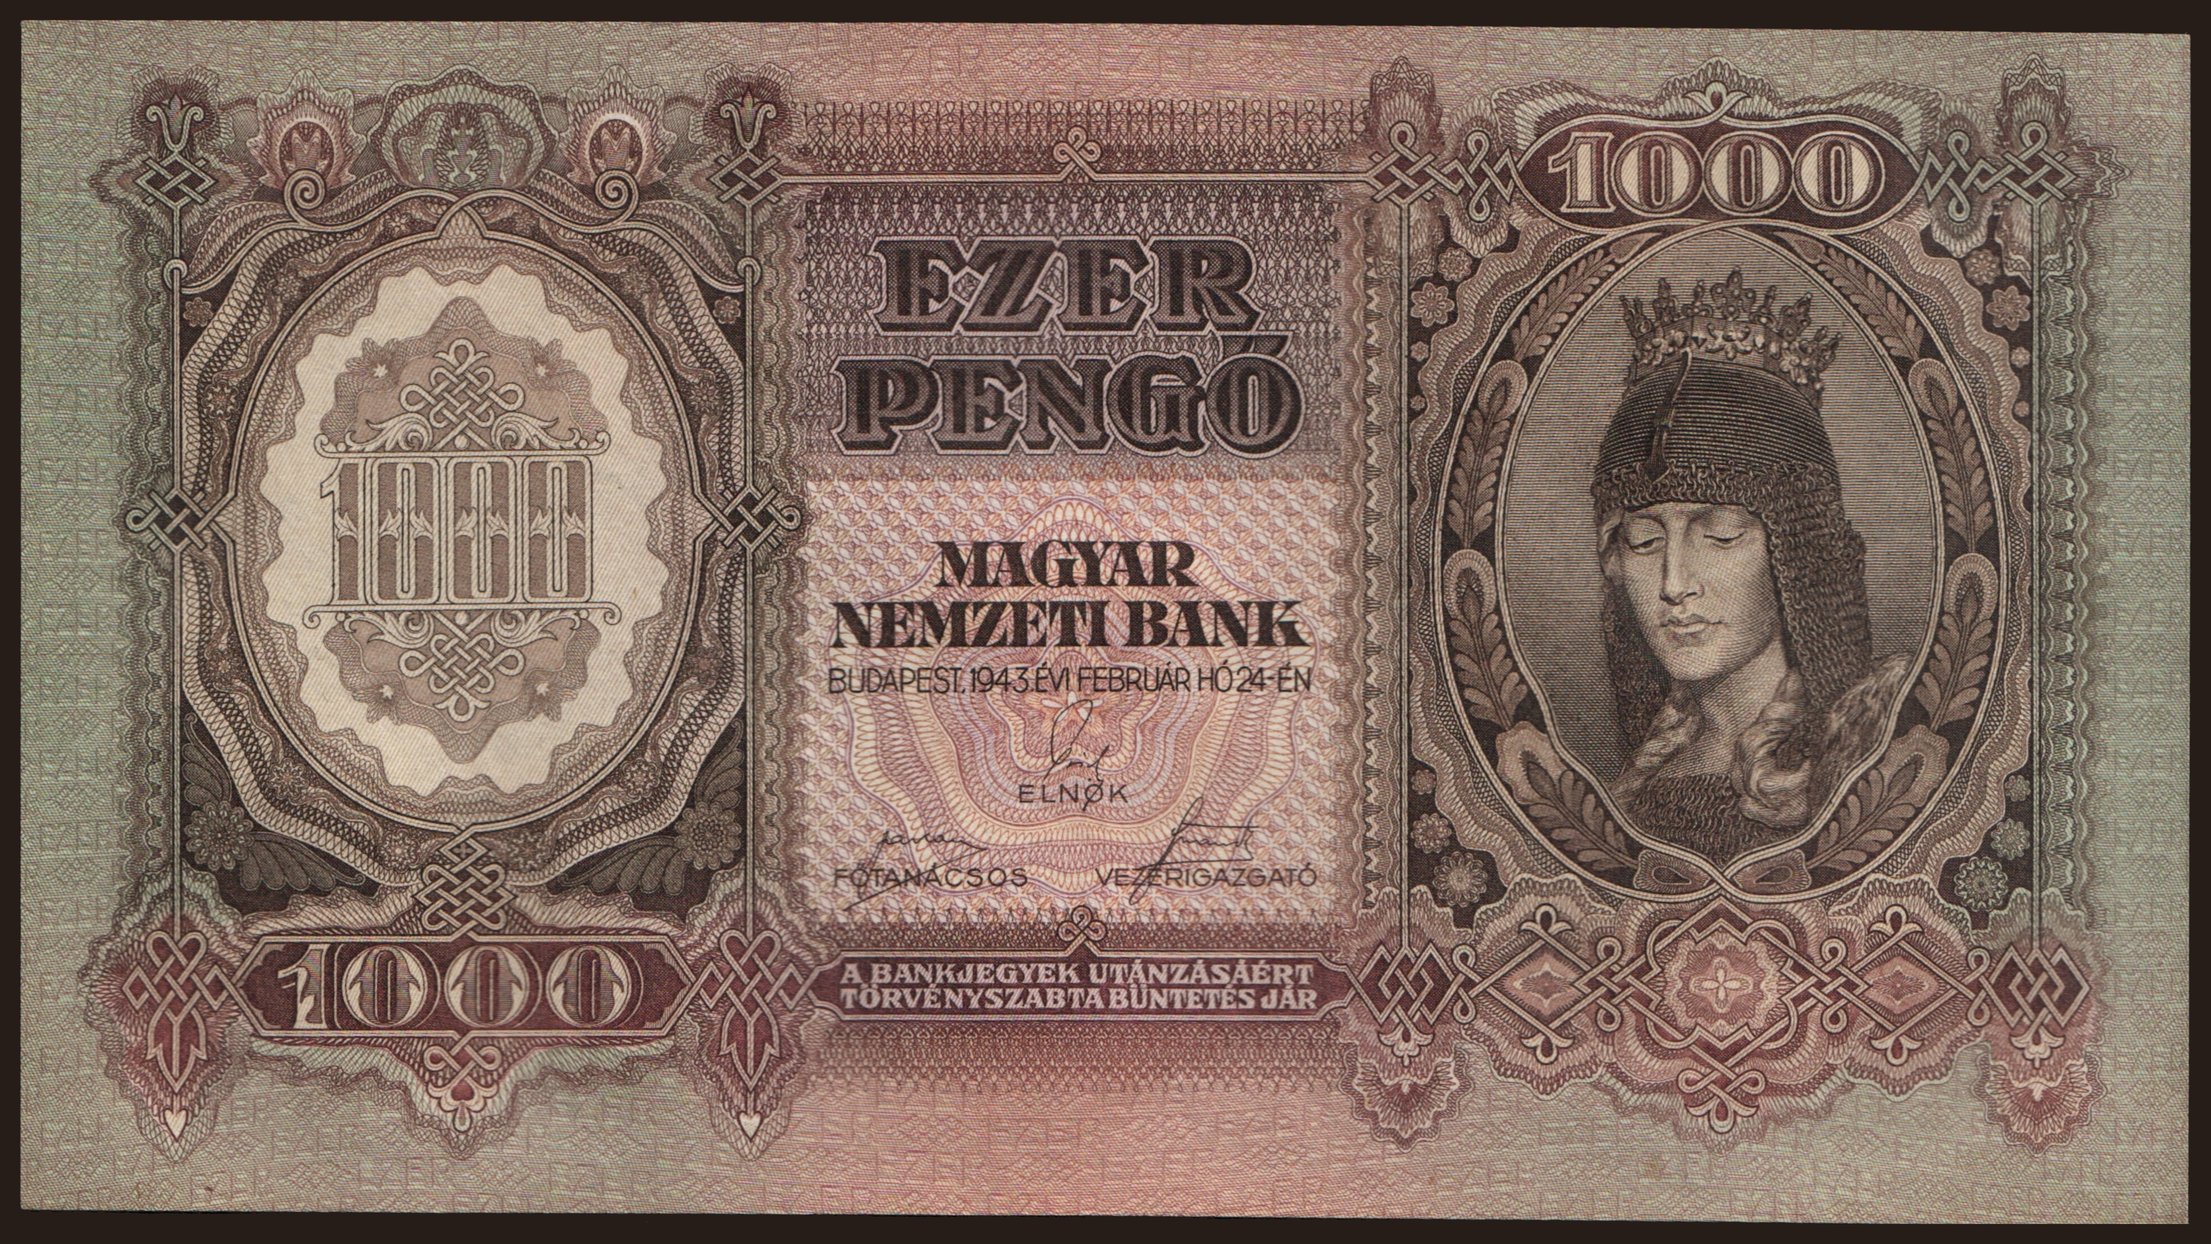 1000 pengő, 1943